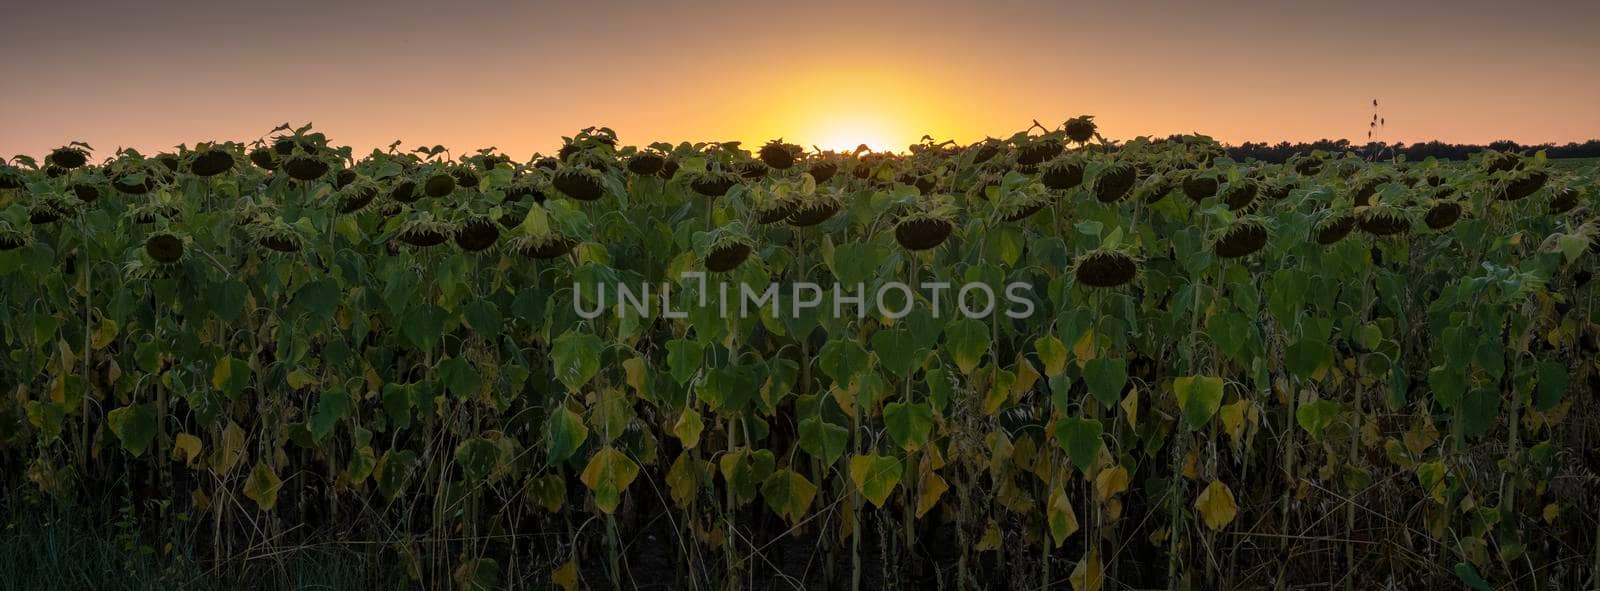 dark sunflowers and colorful sky of setting sun by ahavelaar